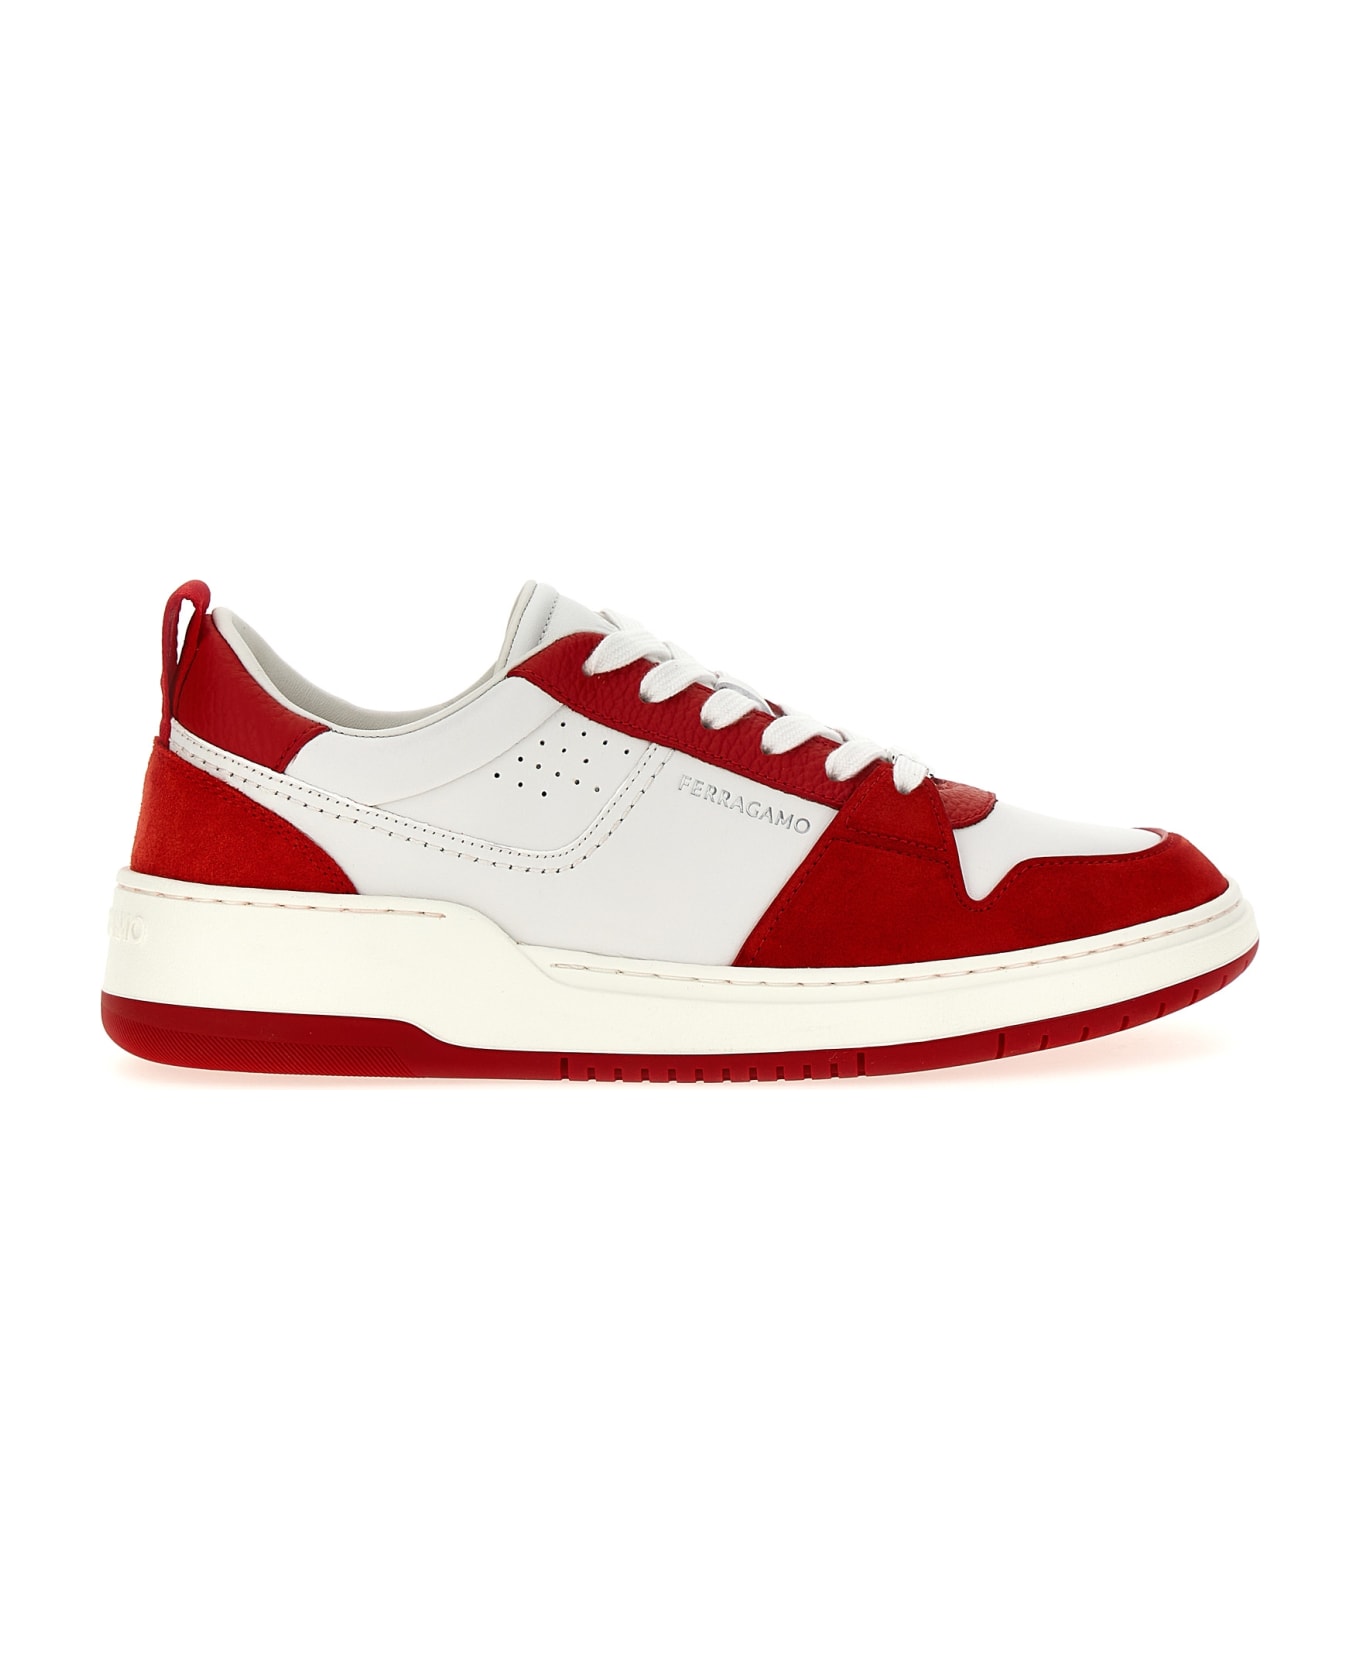 Ferragamo 'dennis' Sneakers - Red スニーカー